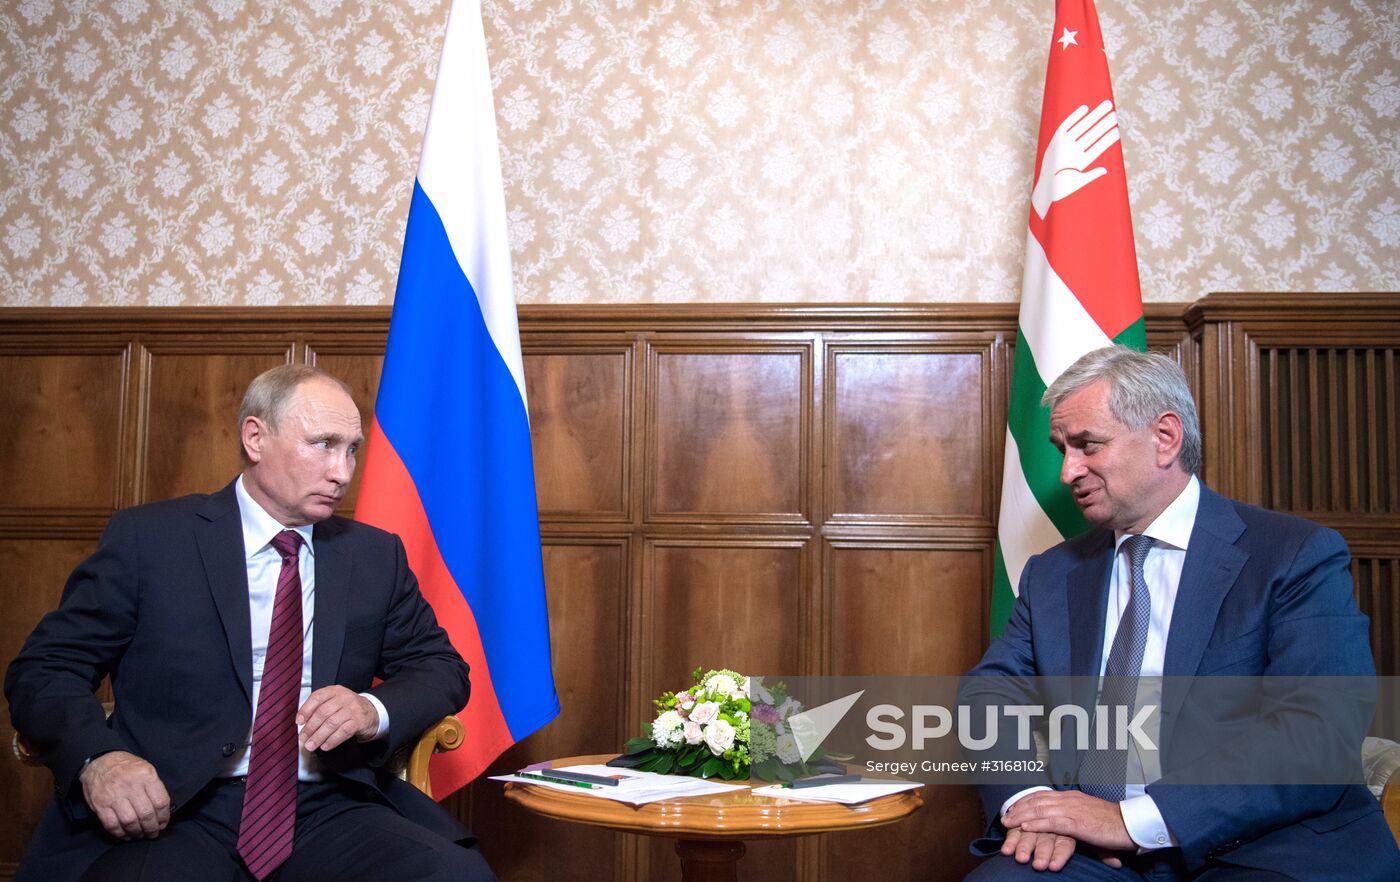 President Vladimir Putin's working visit to Abkhazia